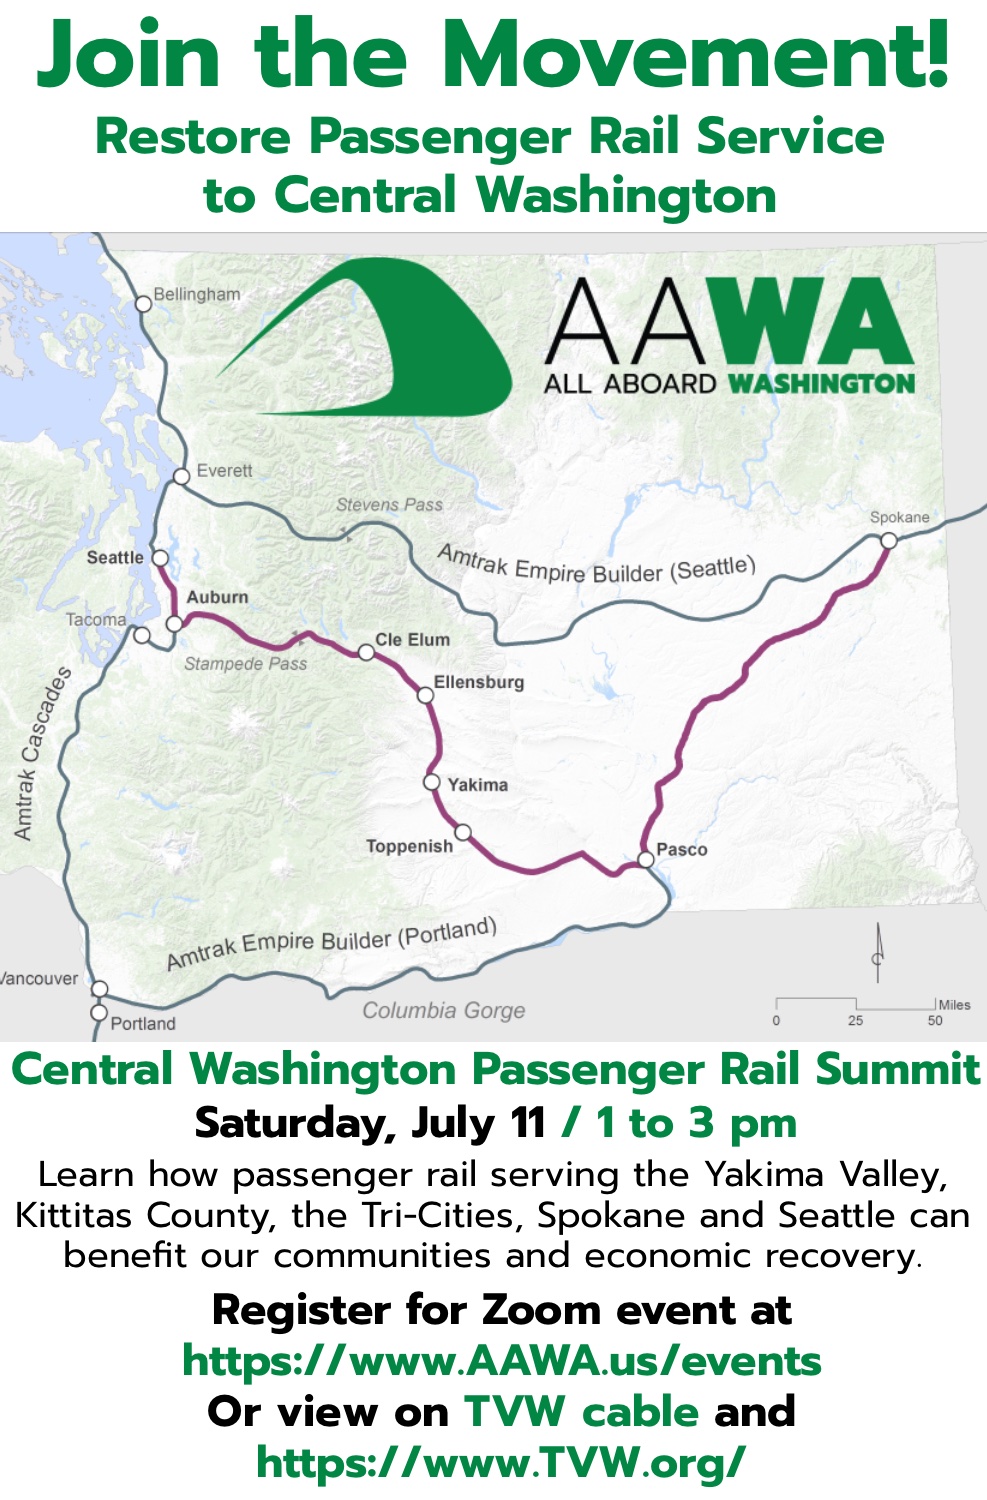 Join the Movement at the Central Washington Passenger Rail Summit